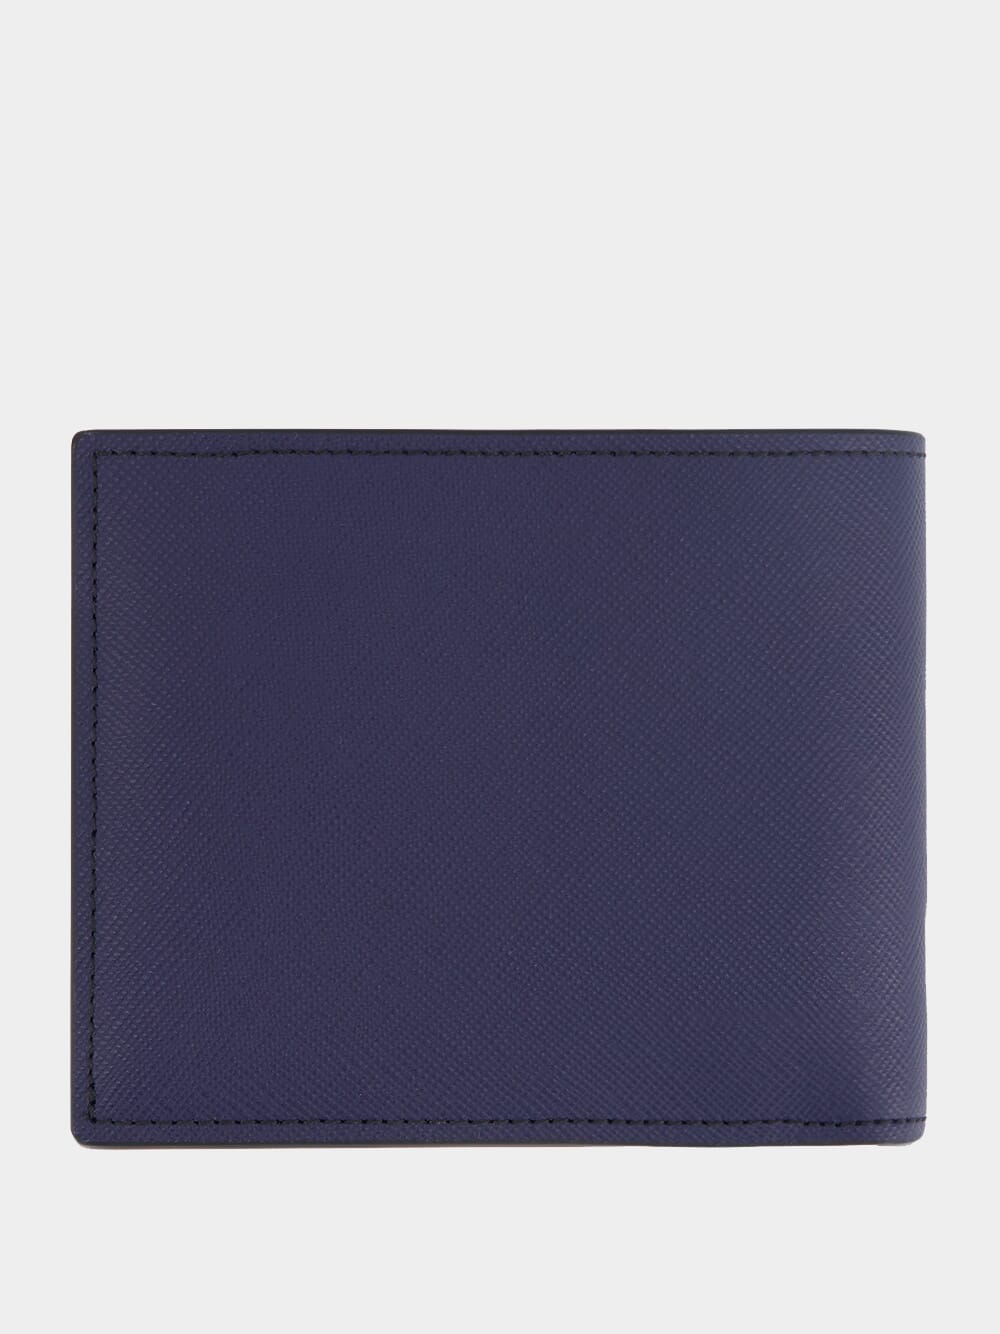 Saffiano Leather Bi-Fold Wallet